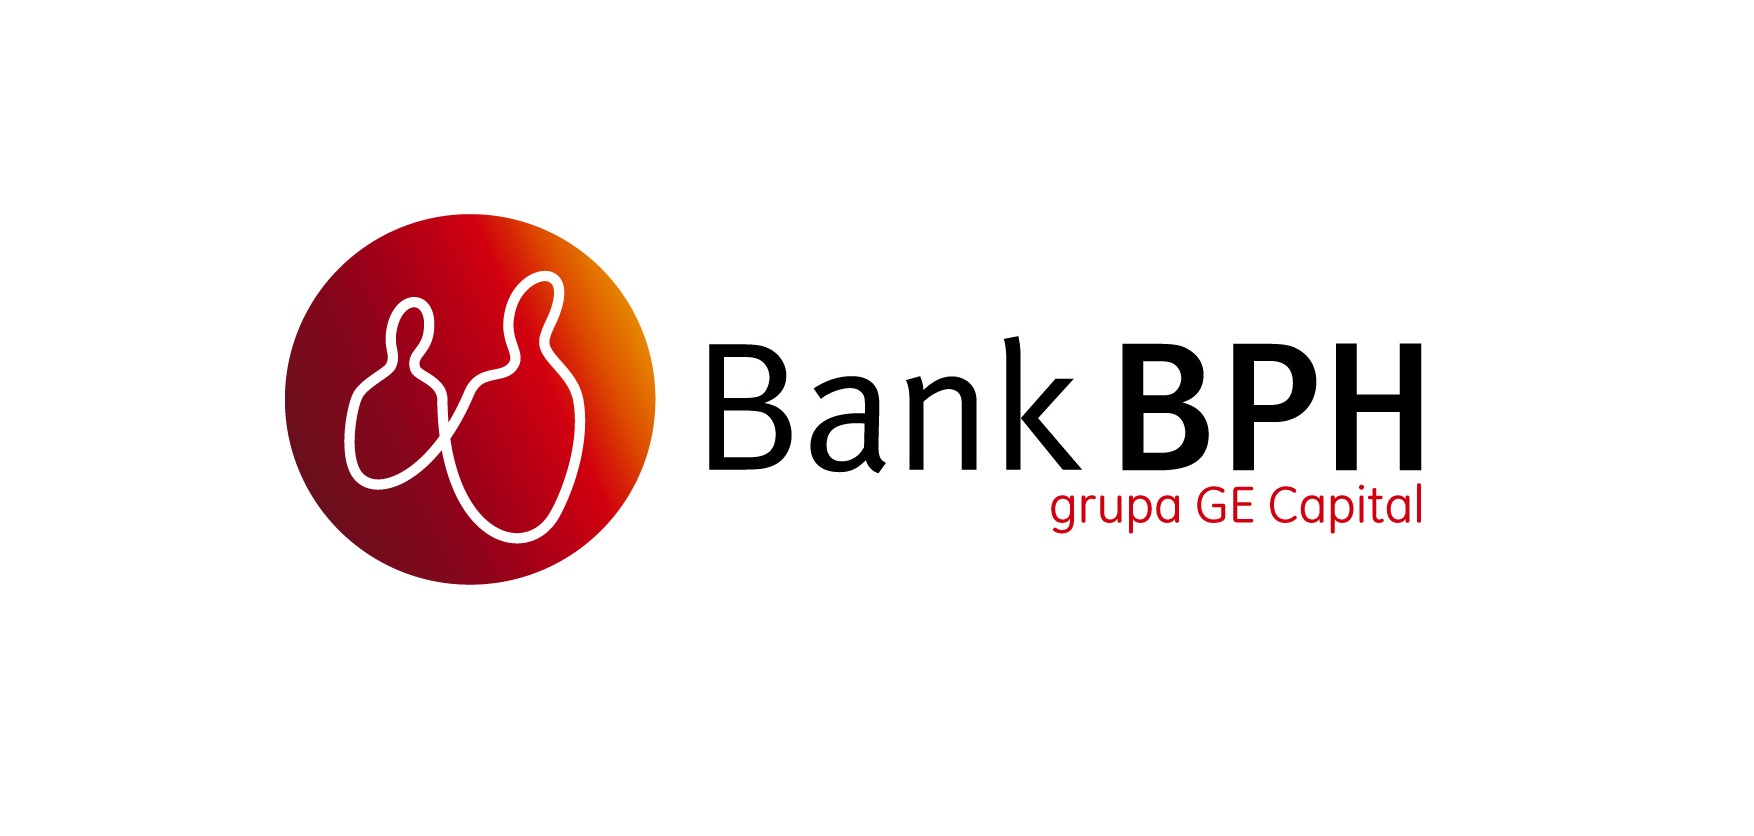 Bank BPH Logo photo - 1